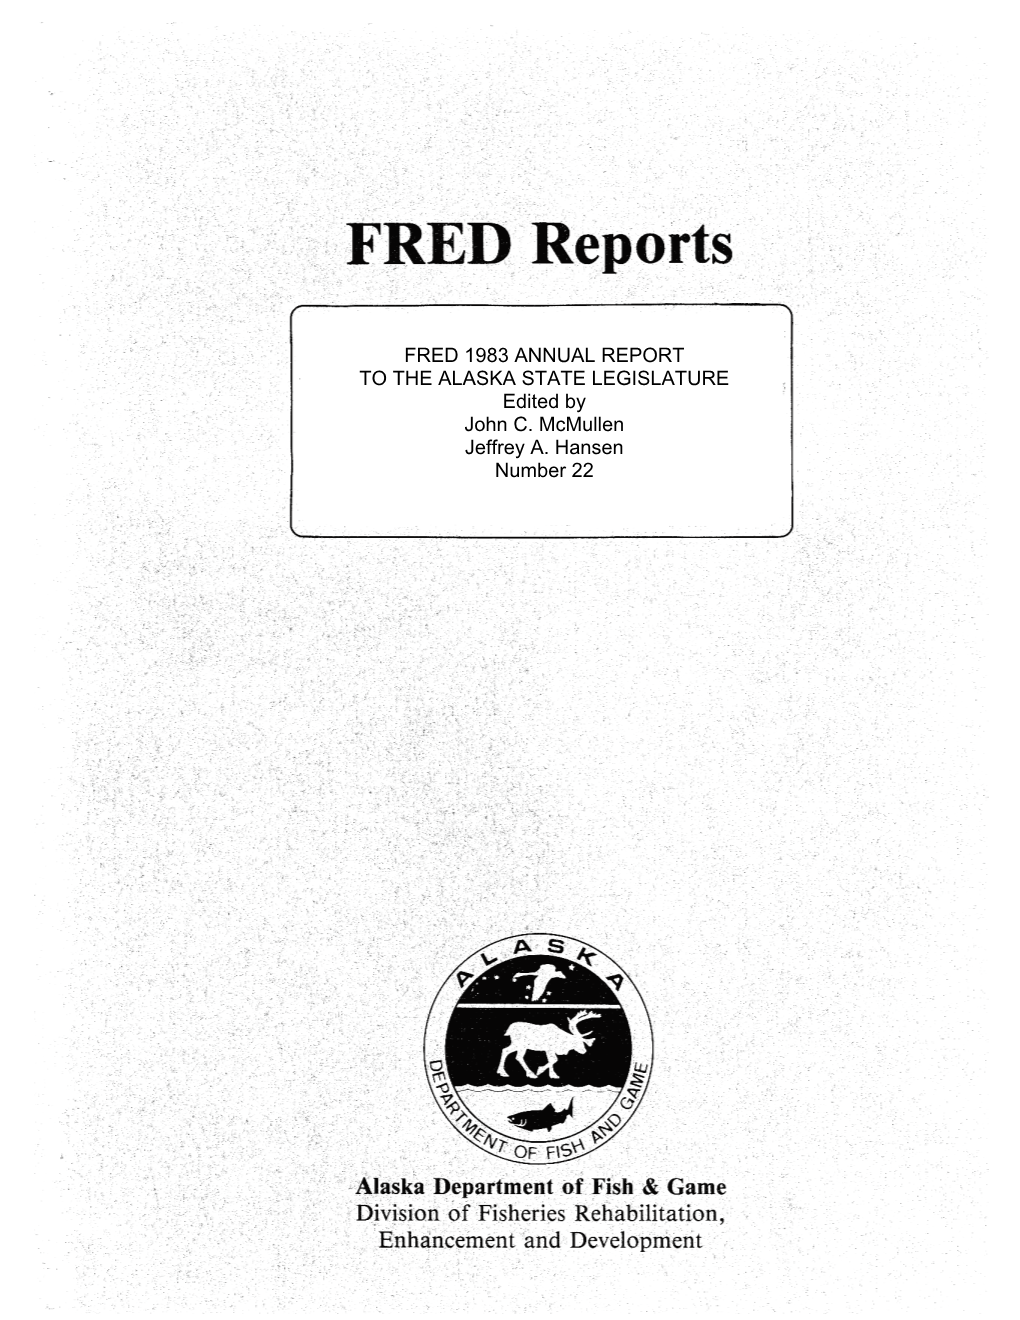 FRED 1983 ANNUAL REPORT to the ALASKA STATE LEGISLATURE Edited by John C